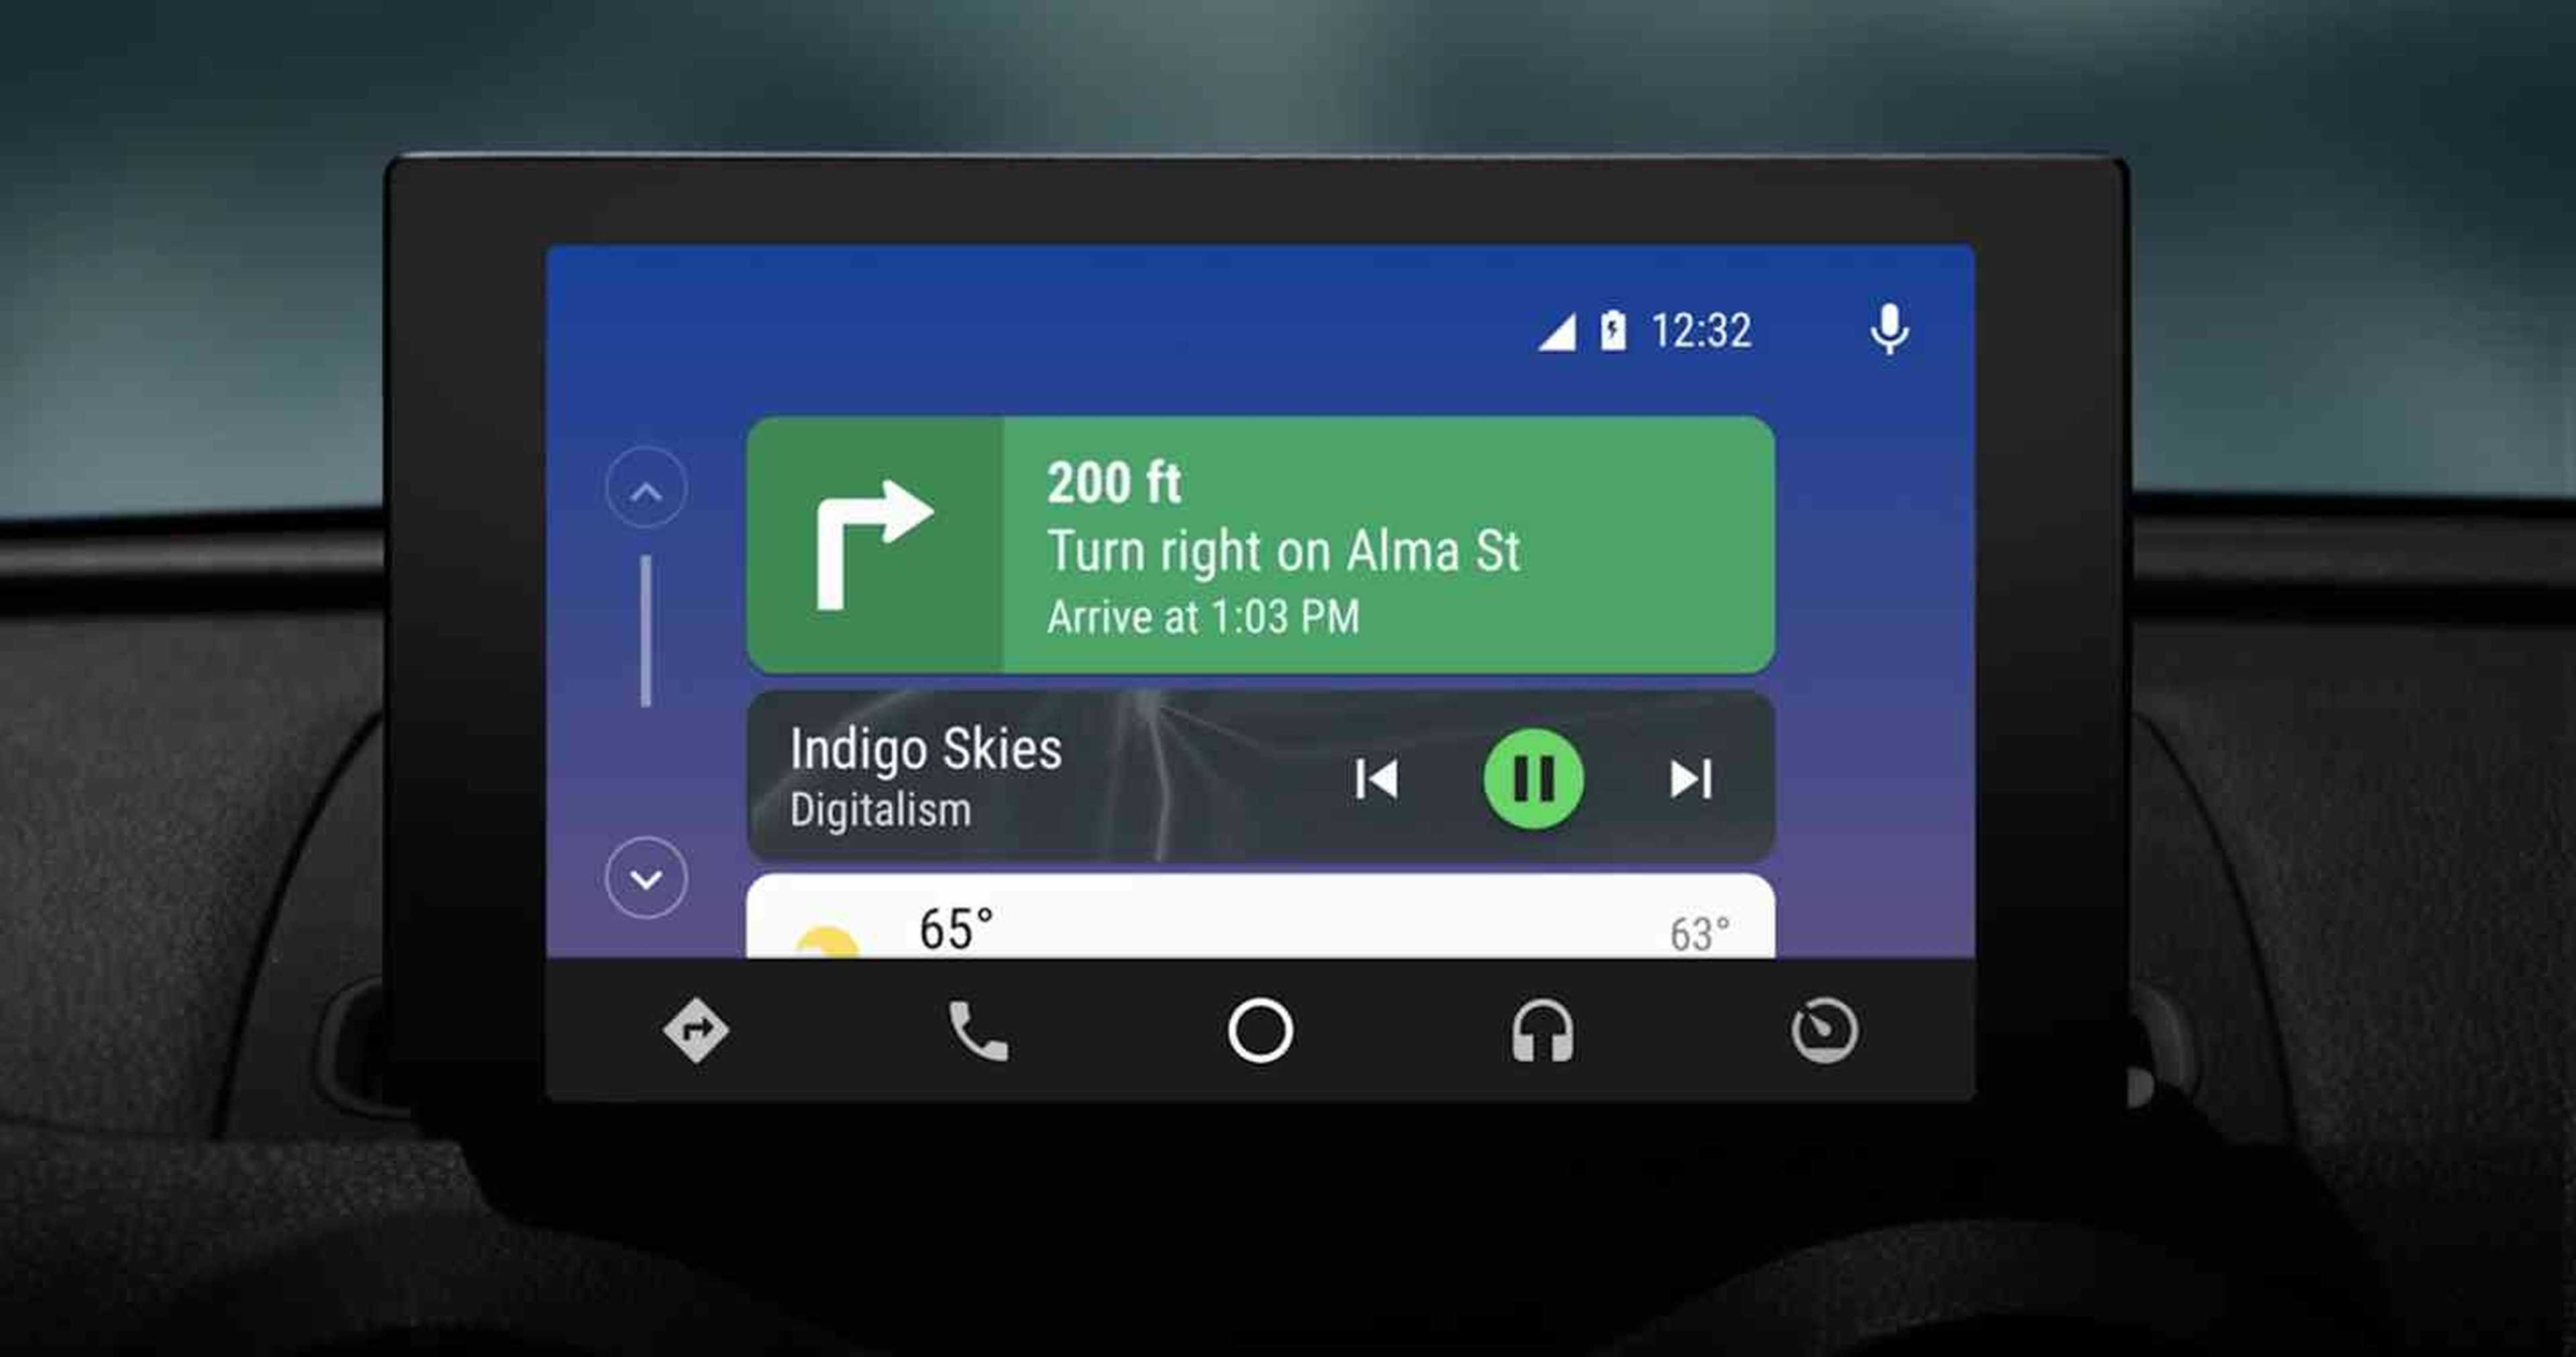 Lamto Pantalla Táctil Coche CarPlay & Android Auto Inalámbrico